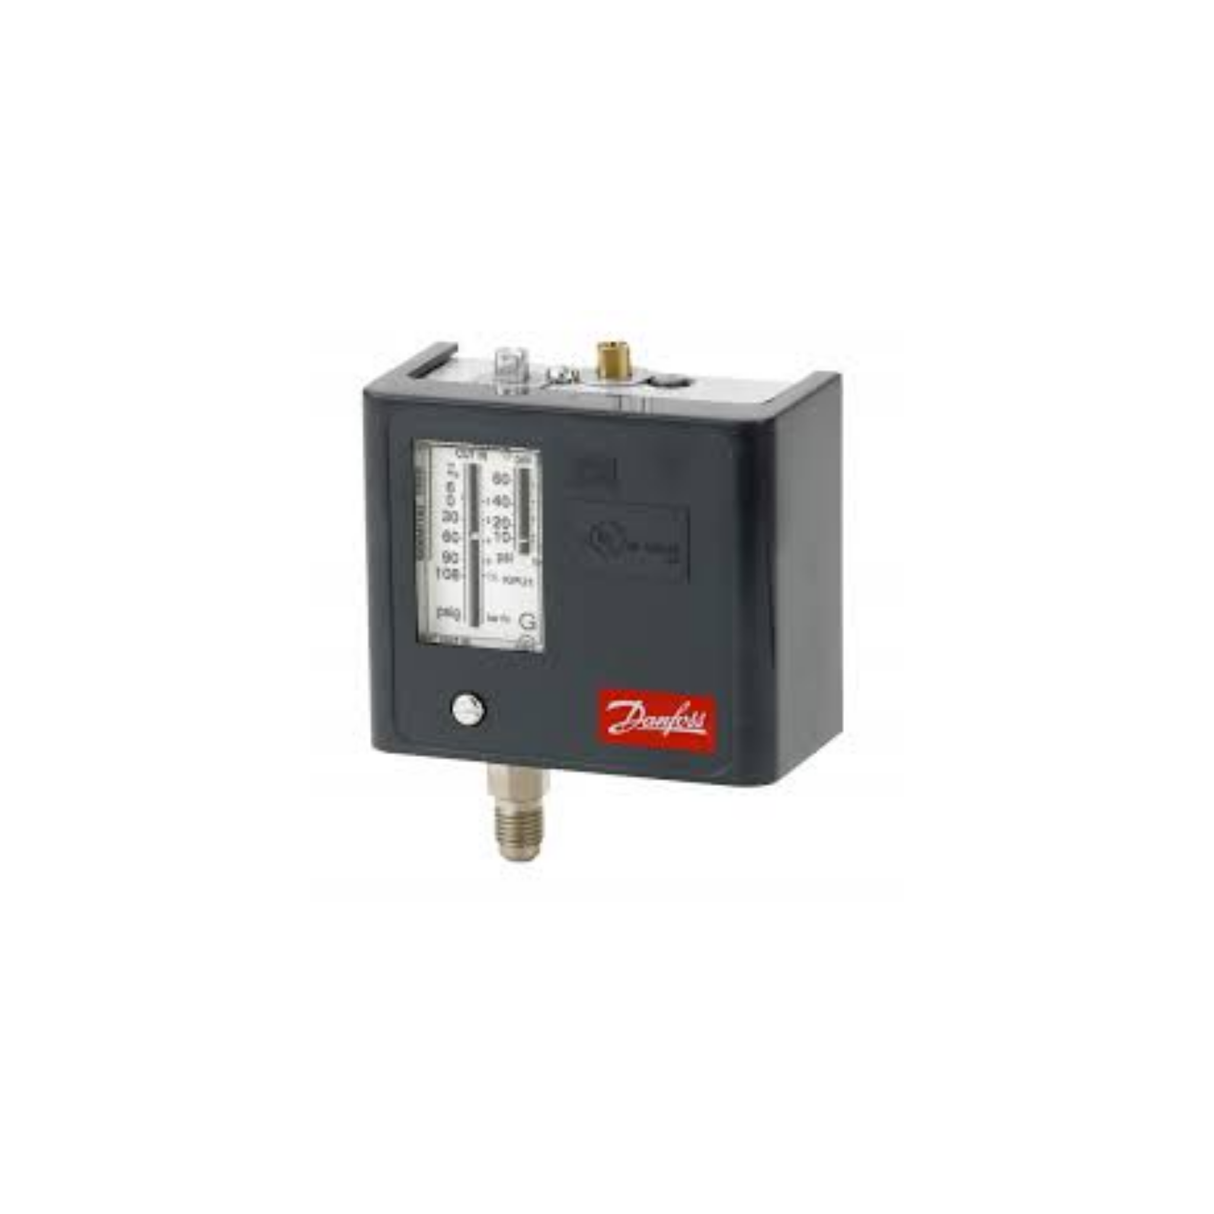 Danfoss 060-5231 Pressure Switch